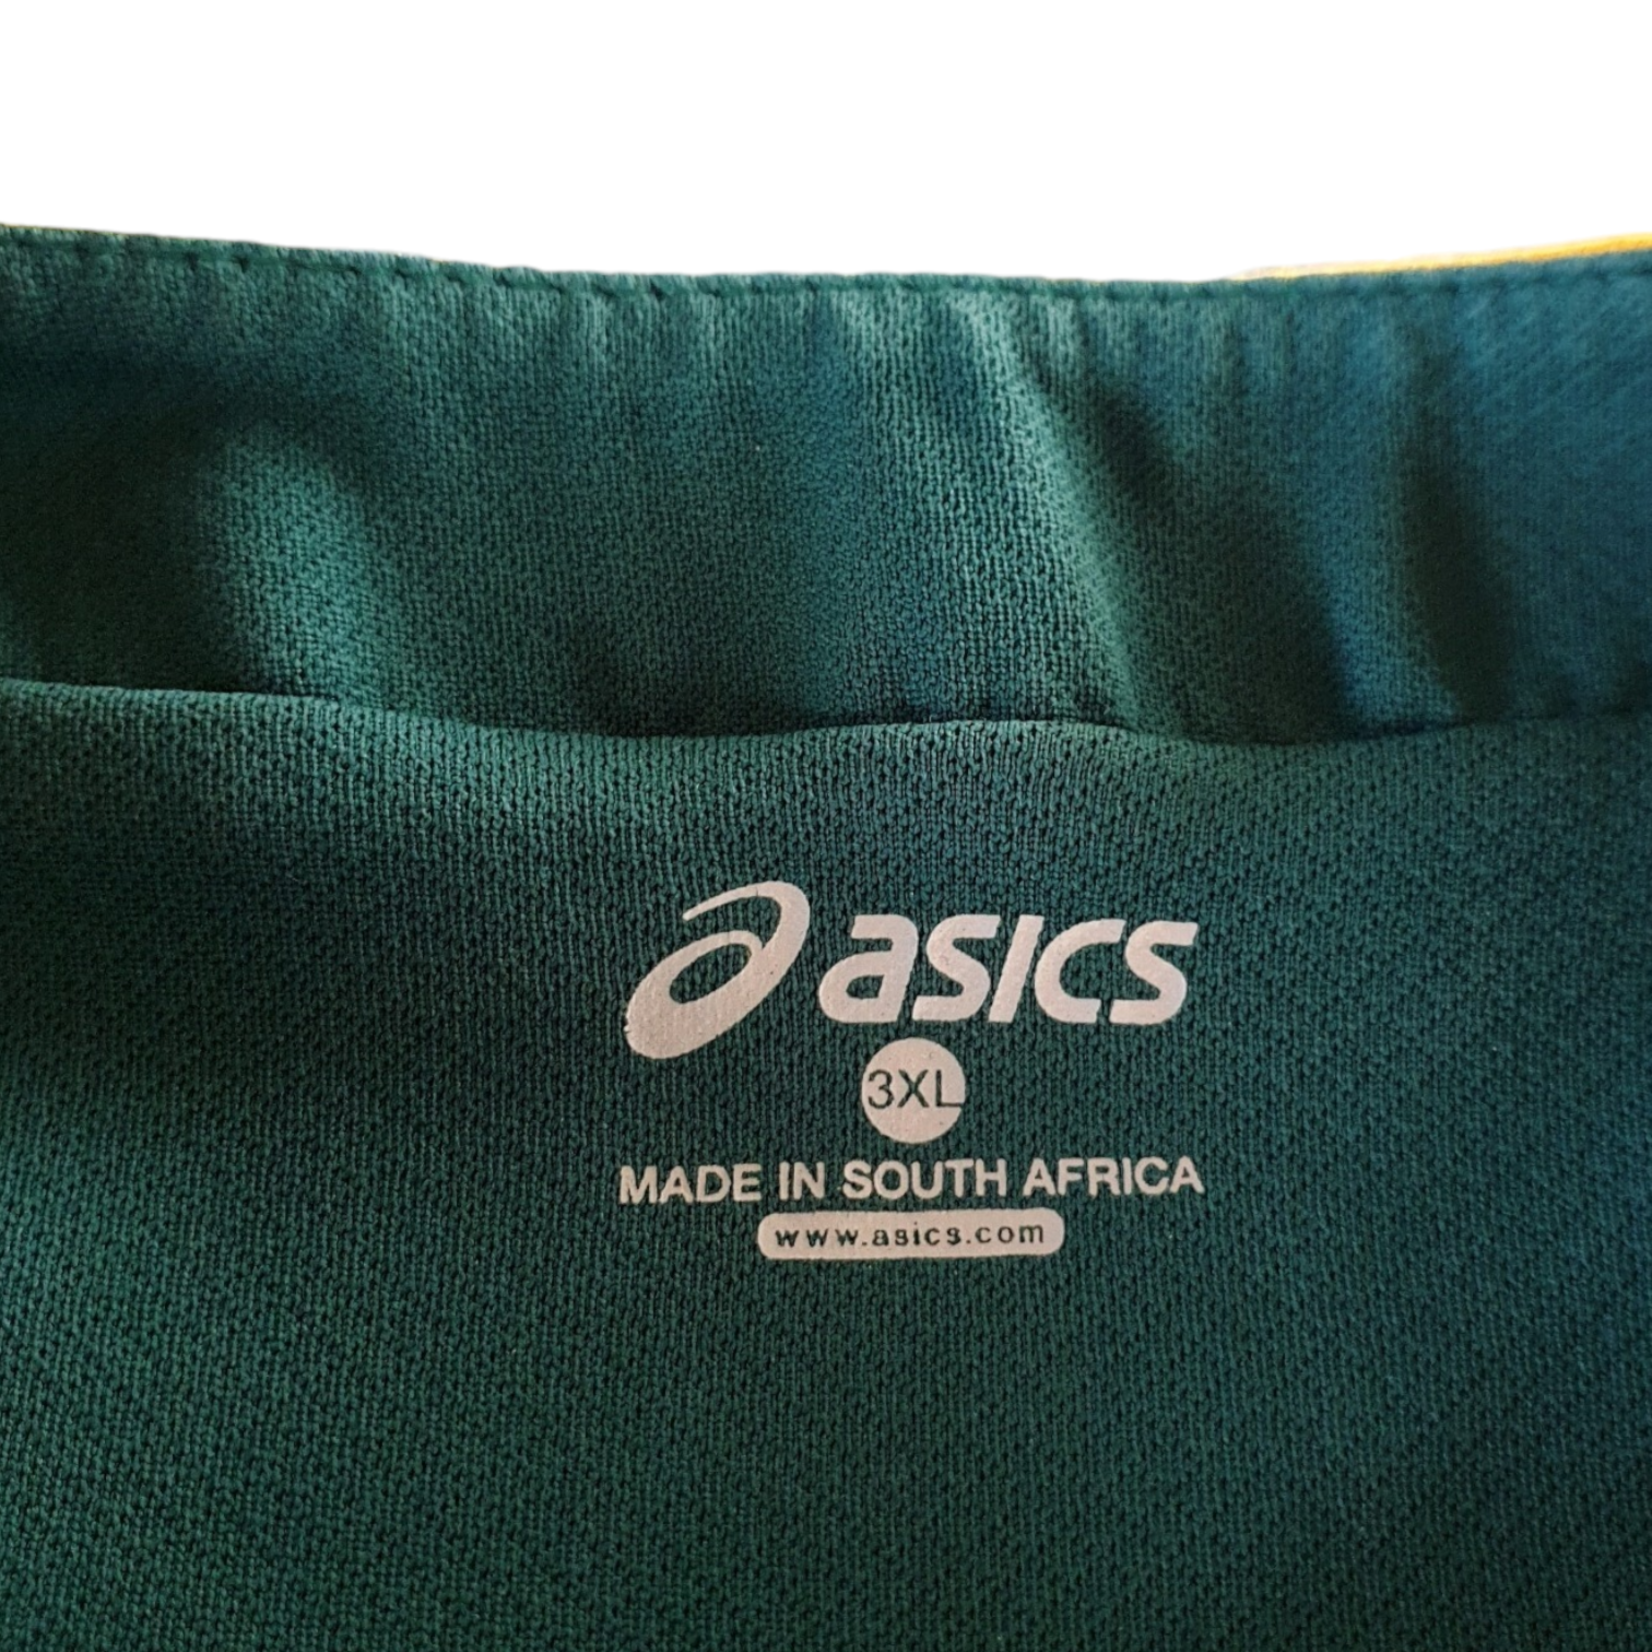 Asics Origineel Asics vintage rugby shirt Zuid Afrika 2014